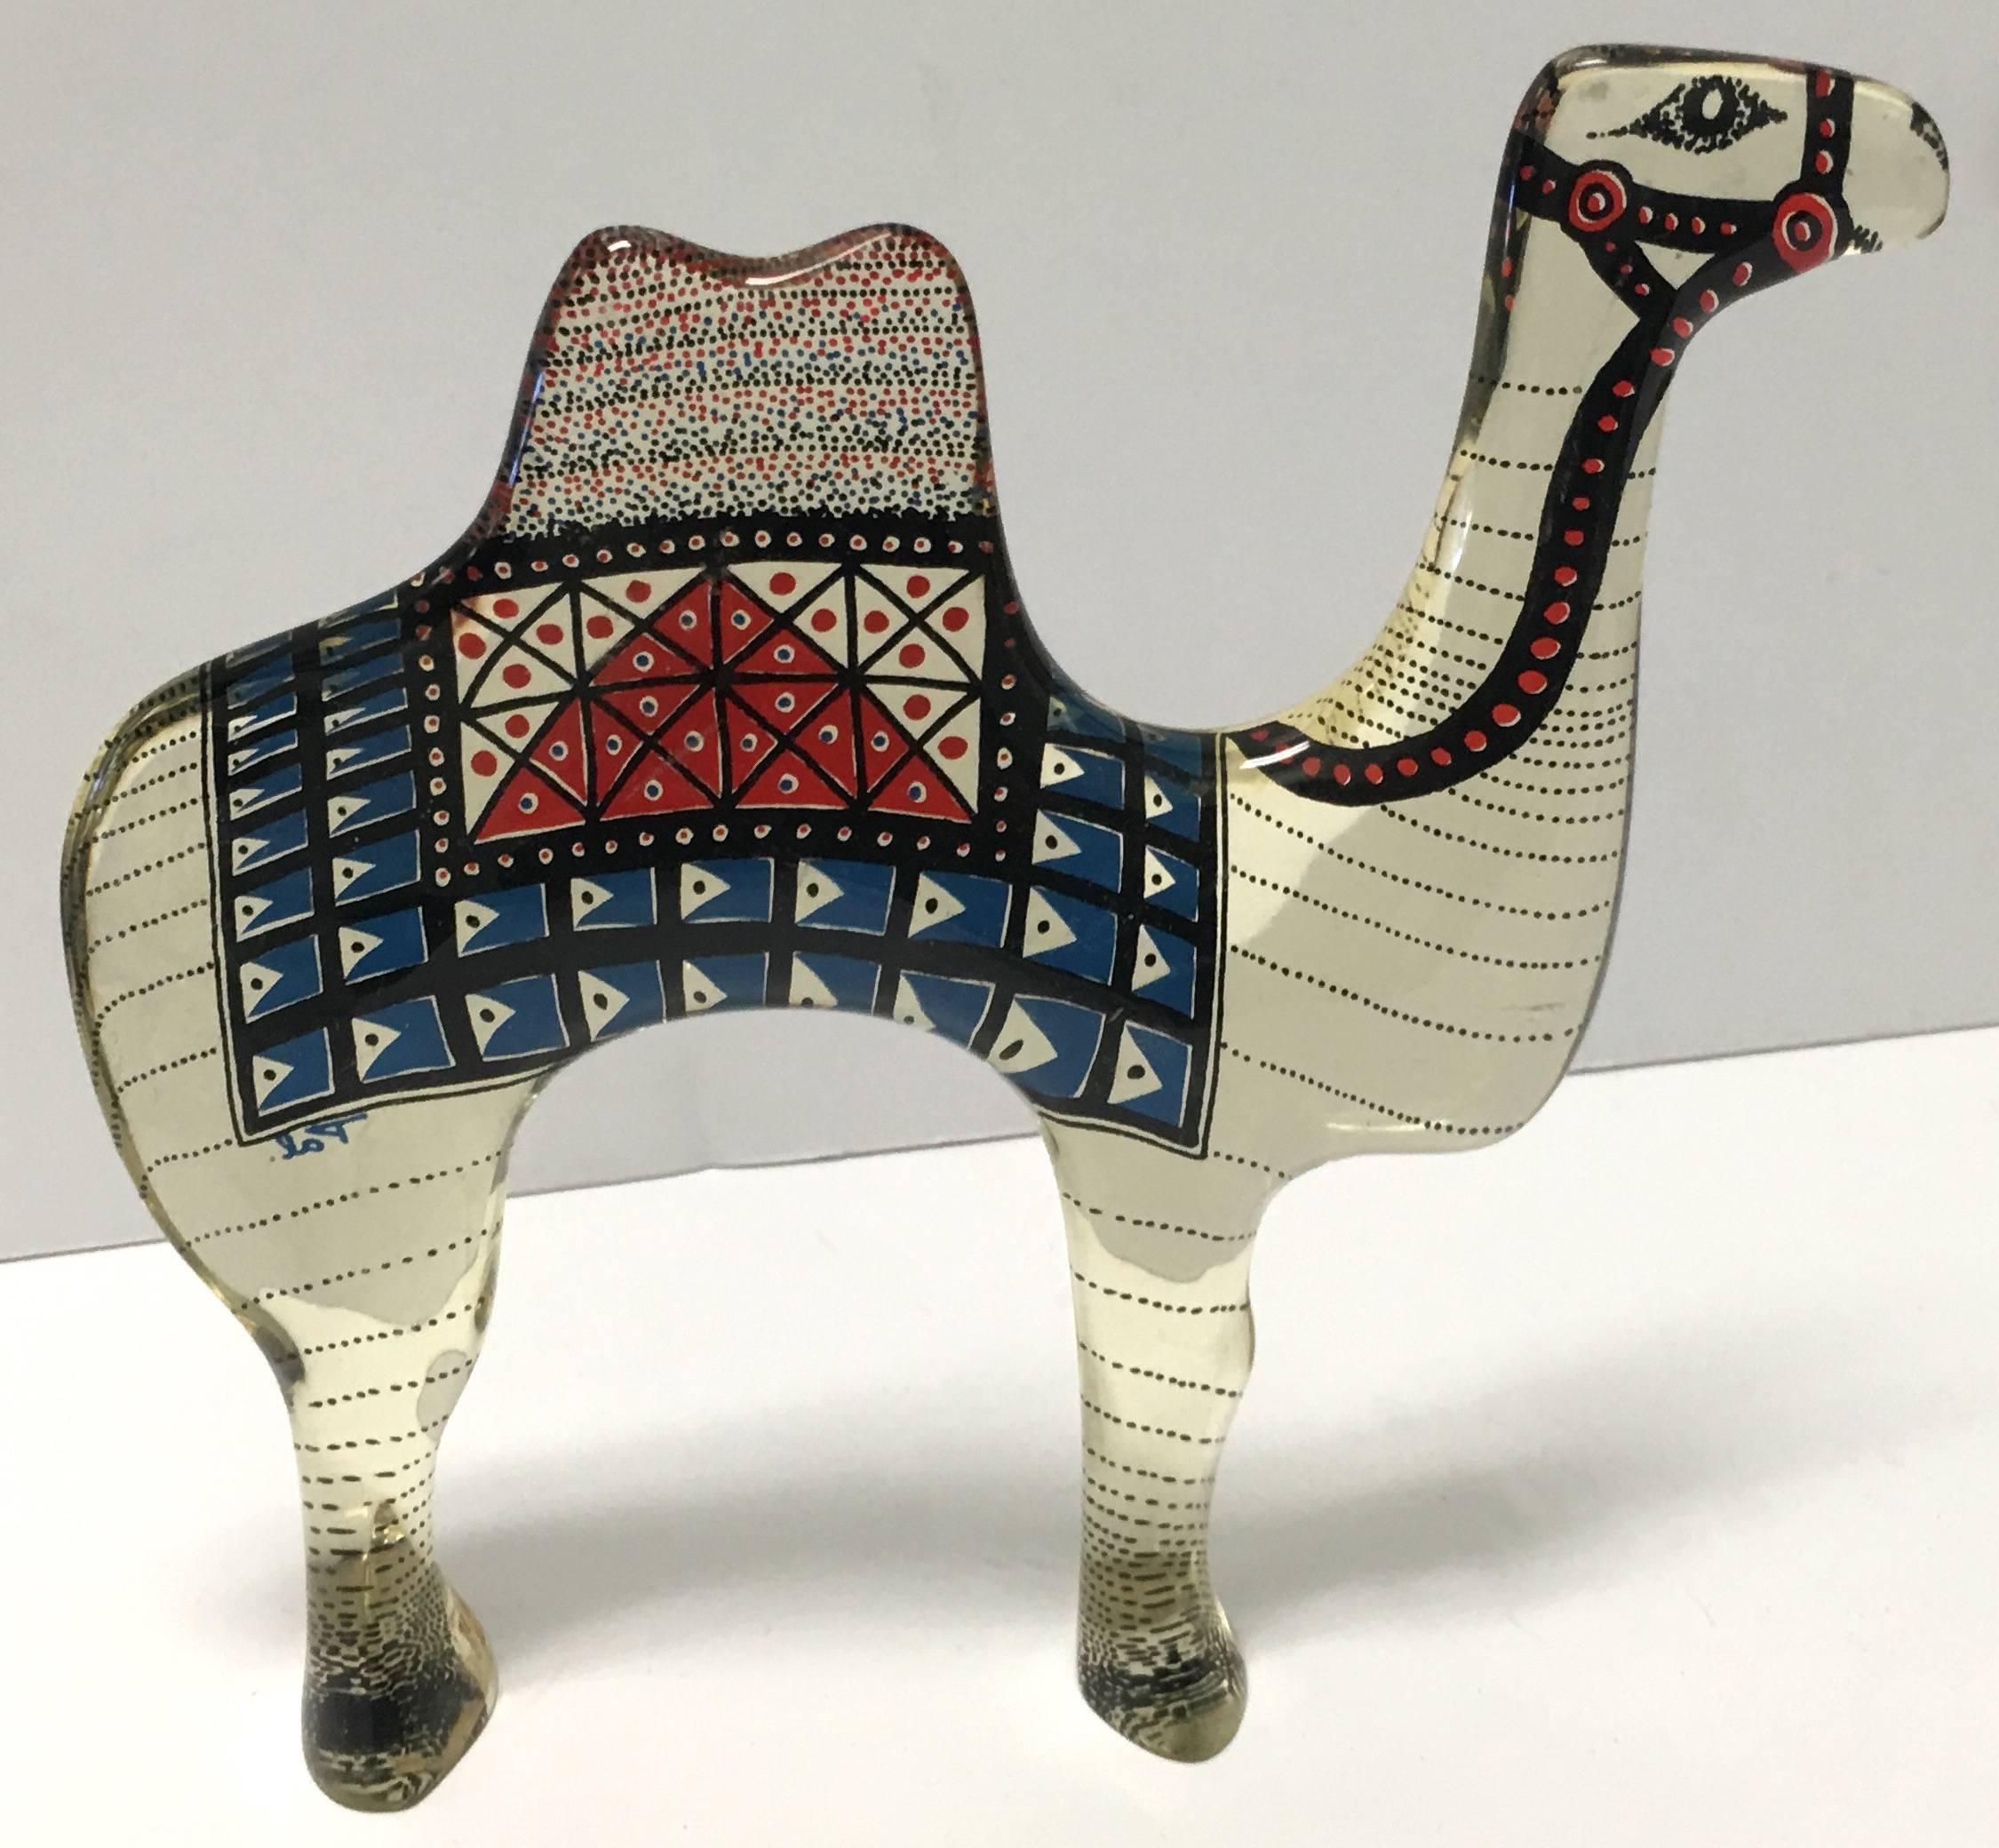 Trio of acrylic camels by Abraham Palatnik. Signed PAL on the lower back leg.
Large camel is 8